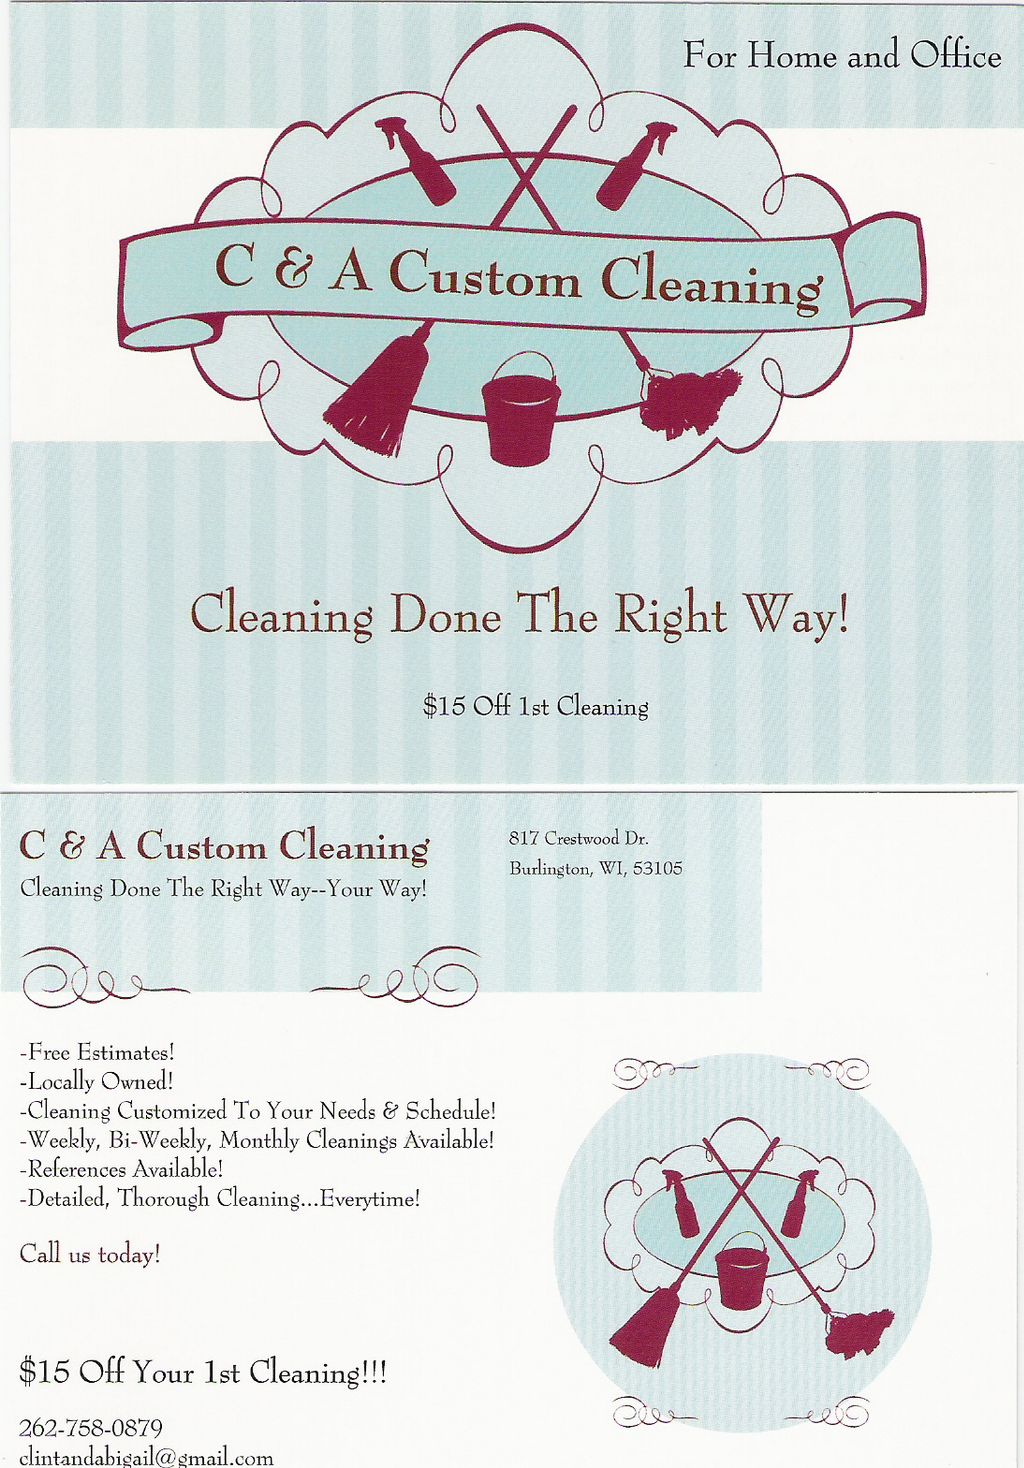 C&A Custom Cleaning